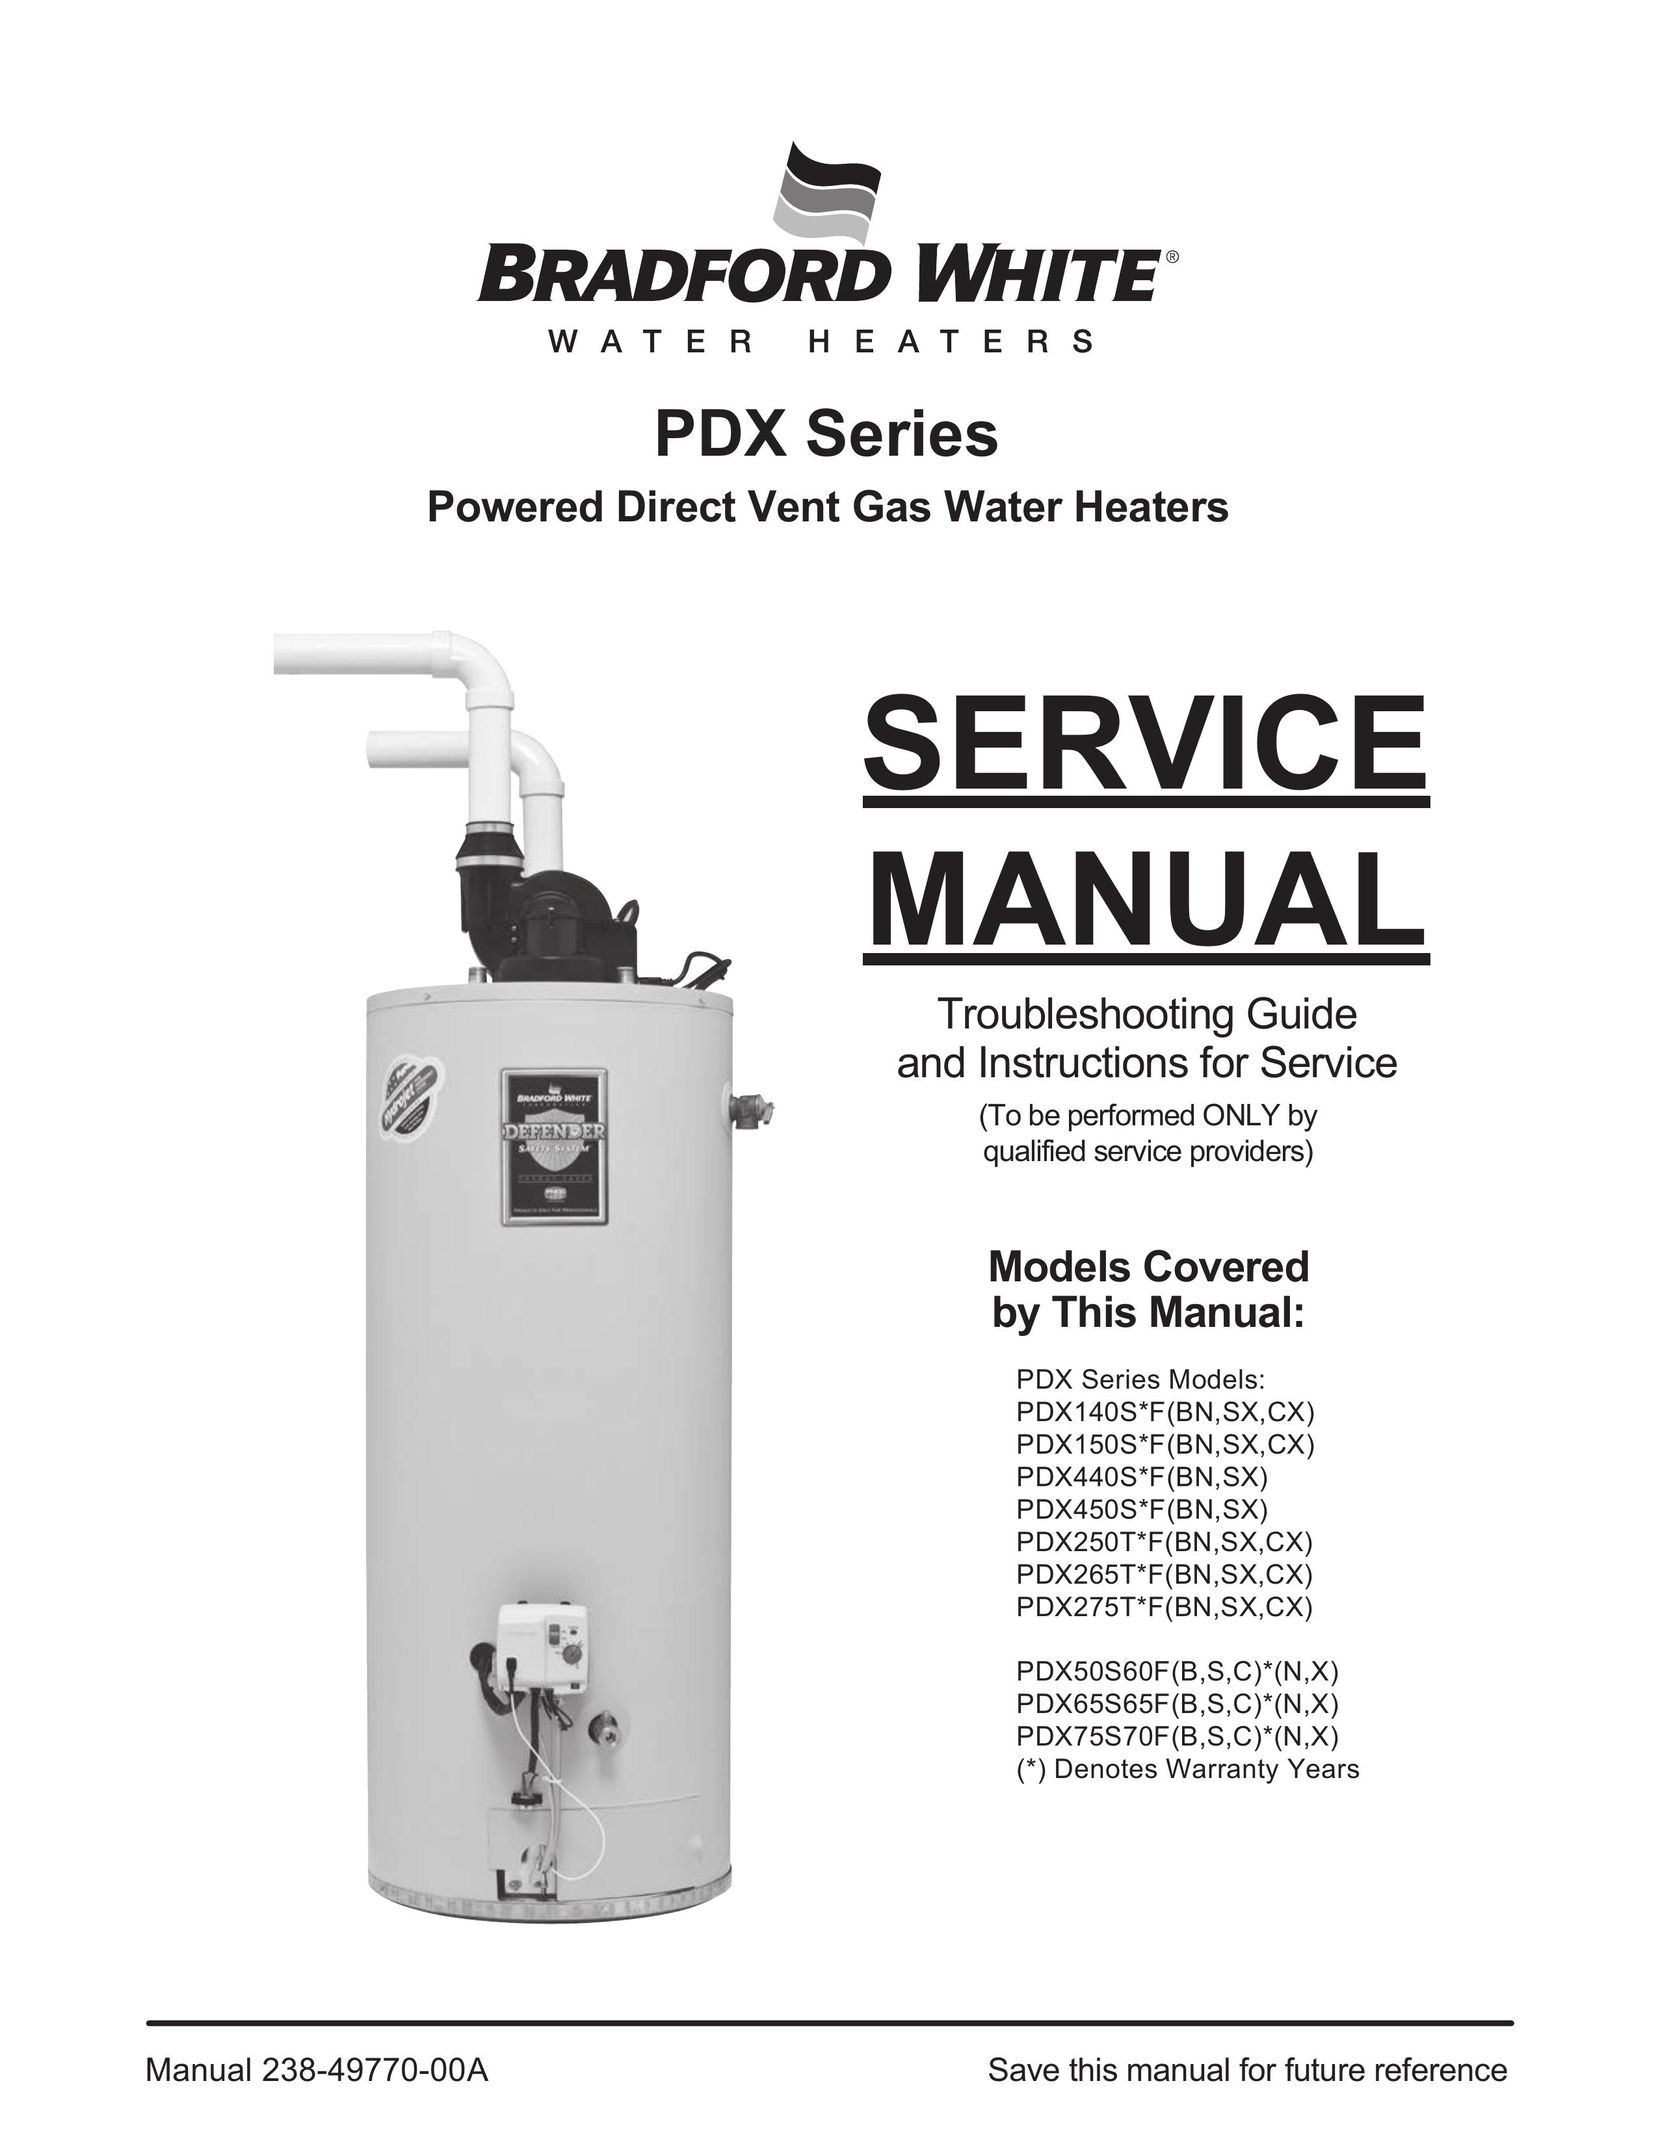 Honeywell PDX75S70F(B,S,C)*(N,X) Water Heater User Manual